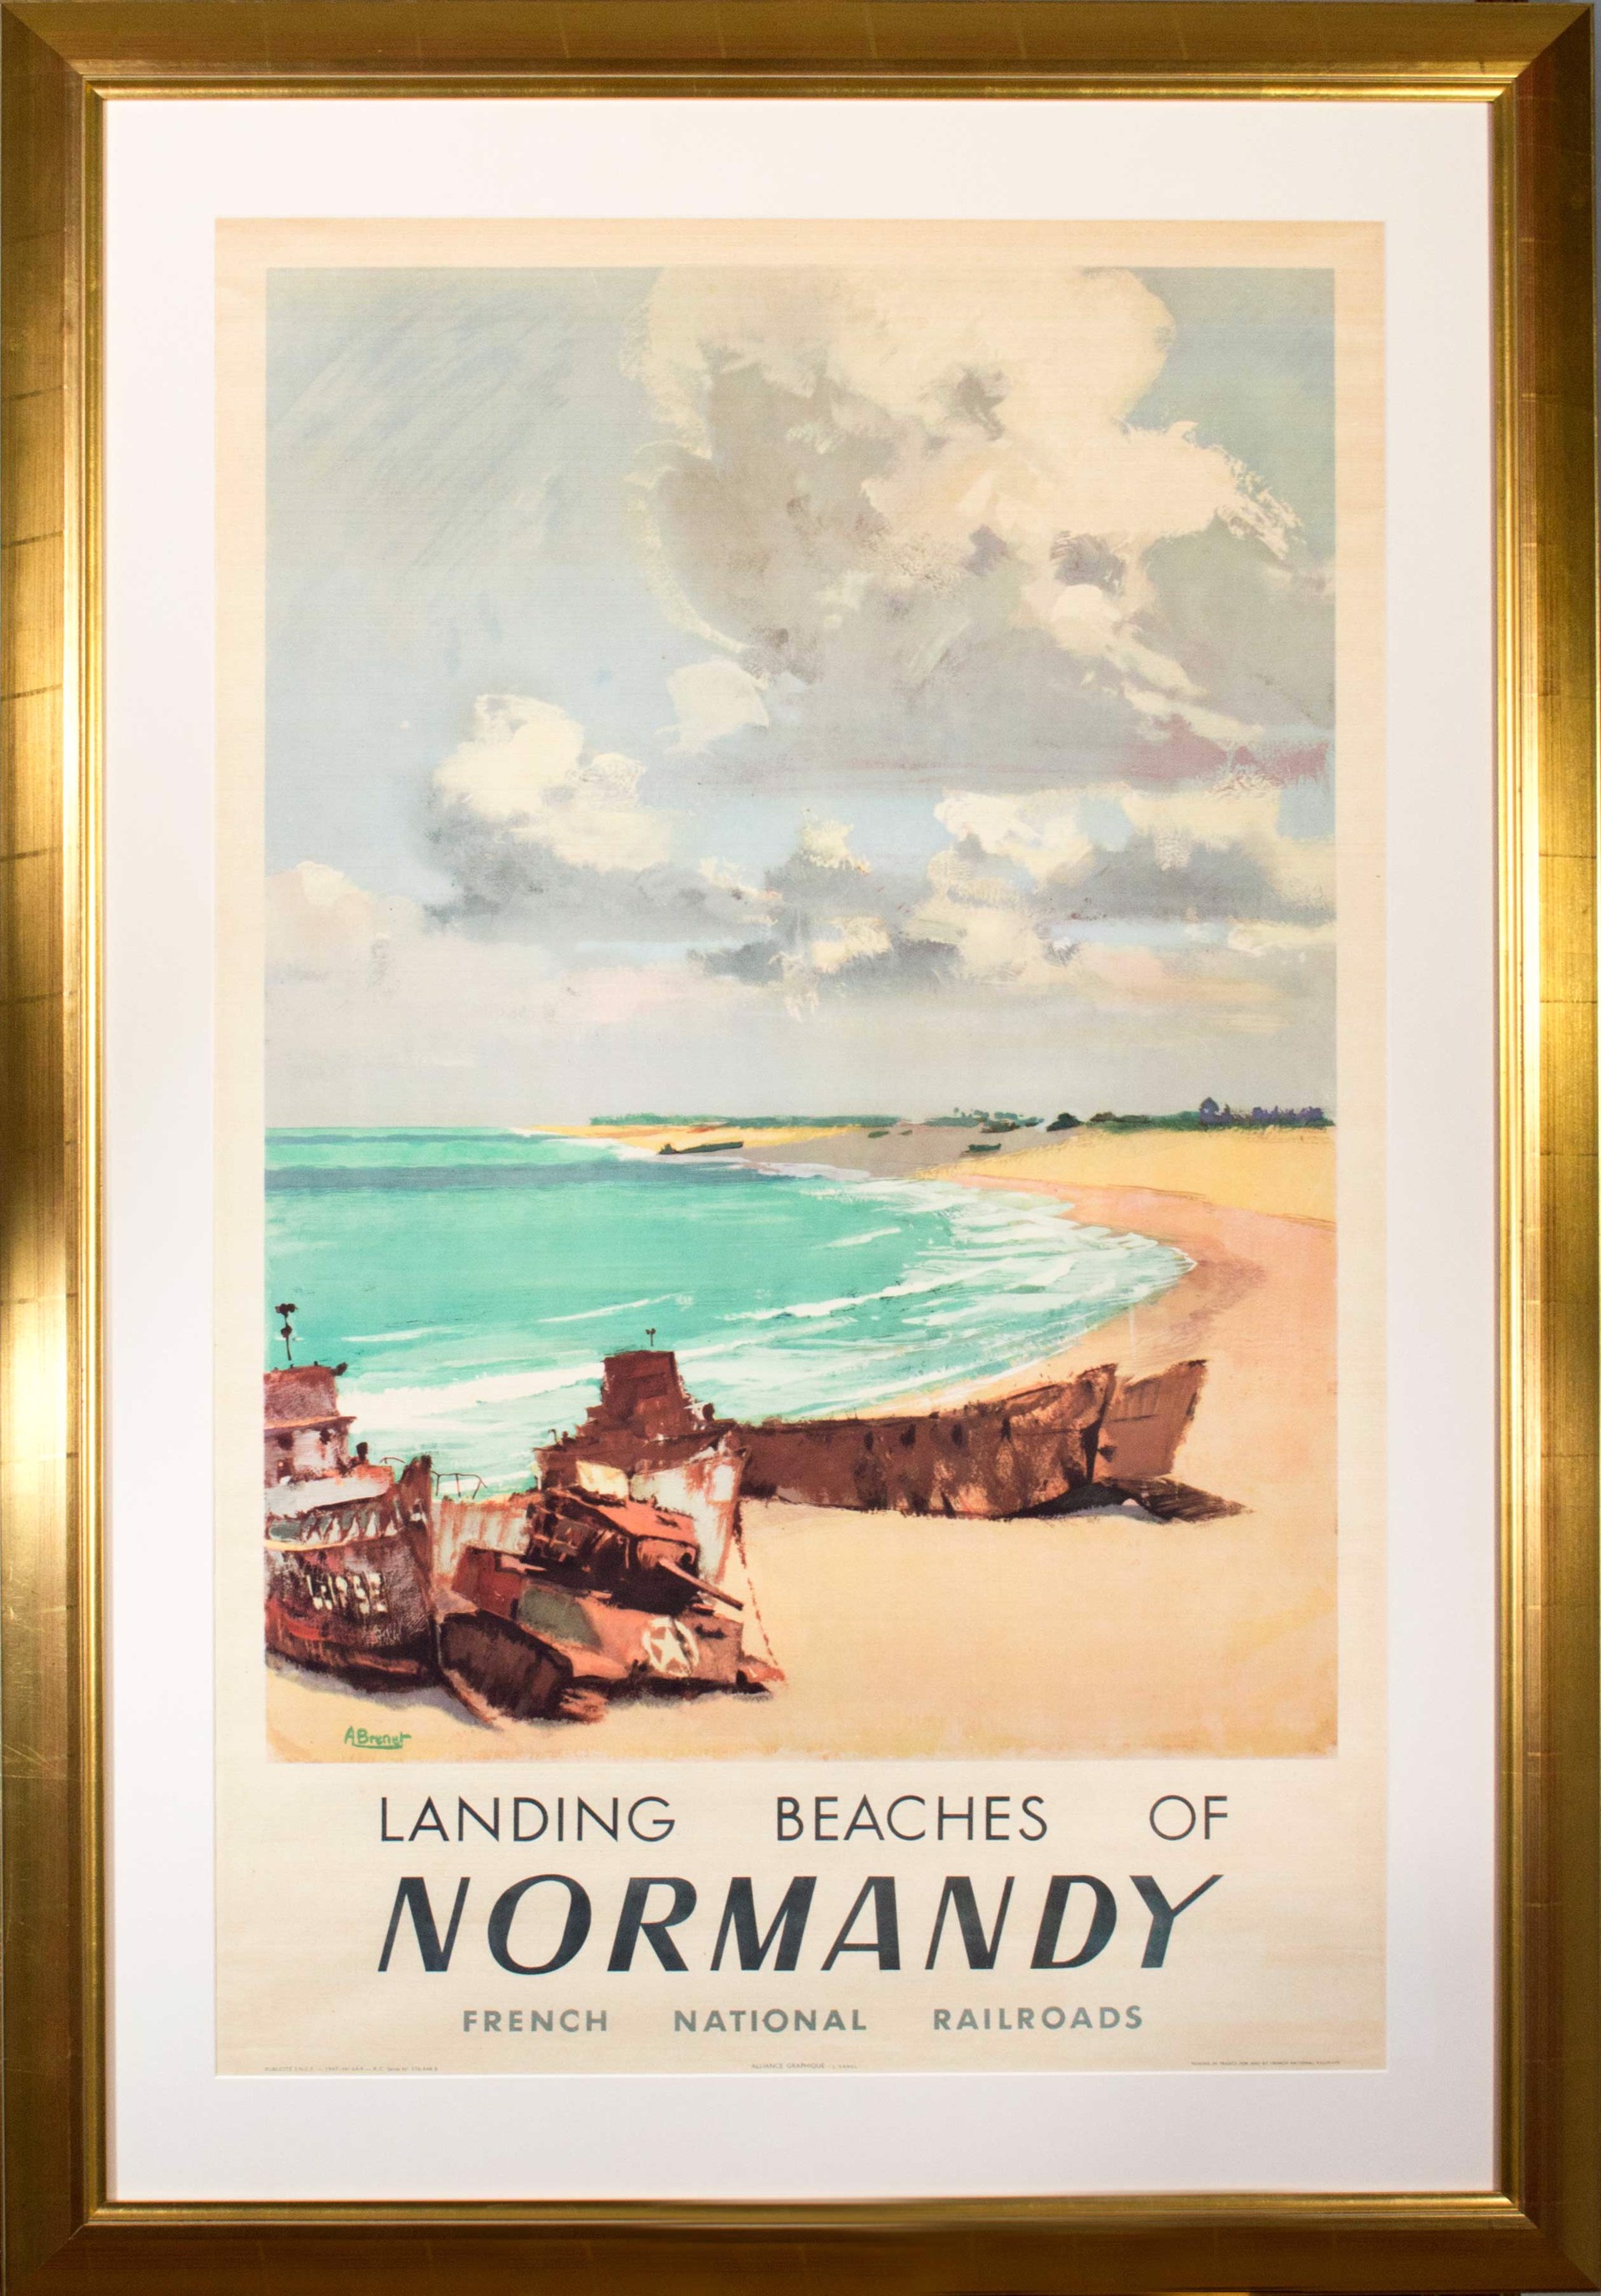 Landing Beaches of Normandy, French National Railroads (Societe Nationale des Chemins de Fer Francais) by Albert Victor Eugene Brenet